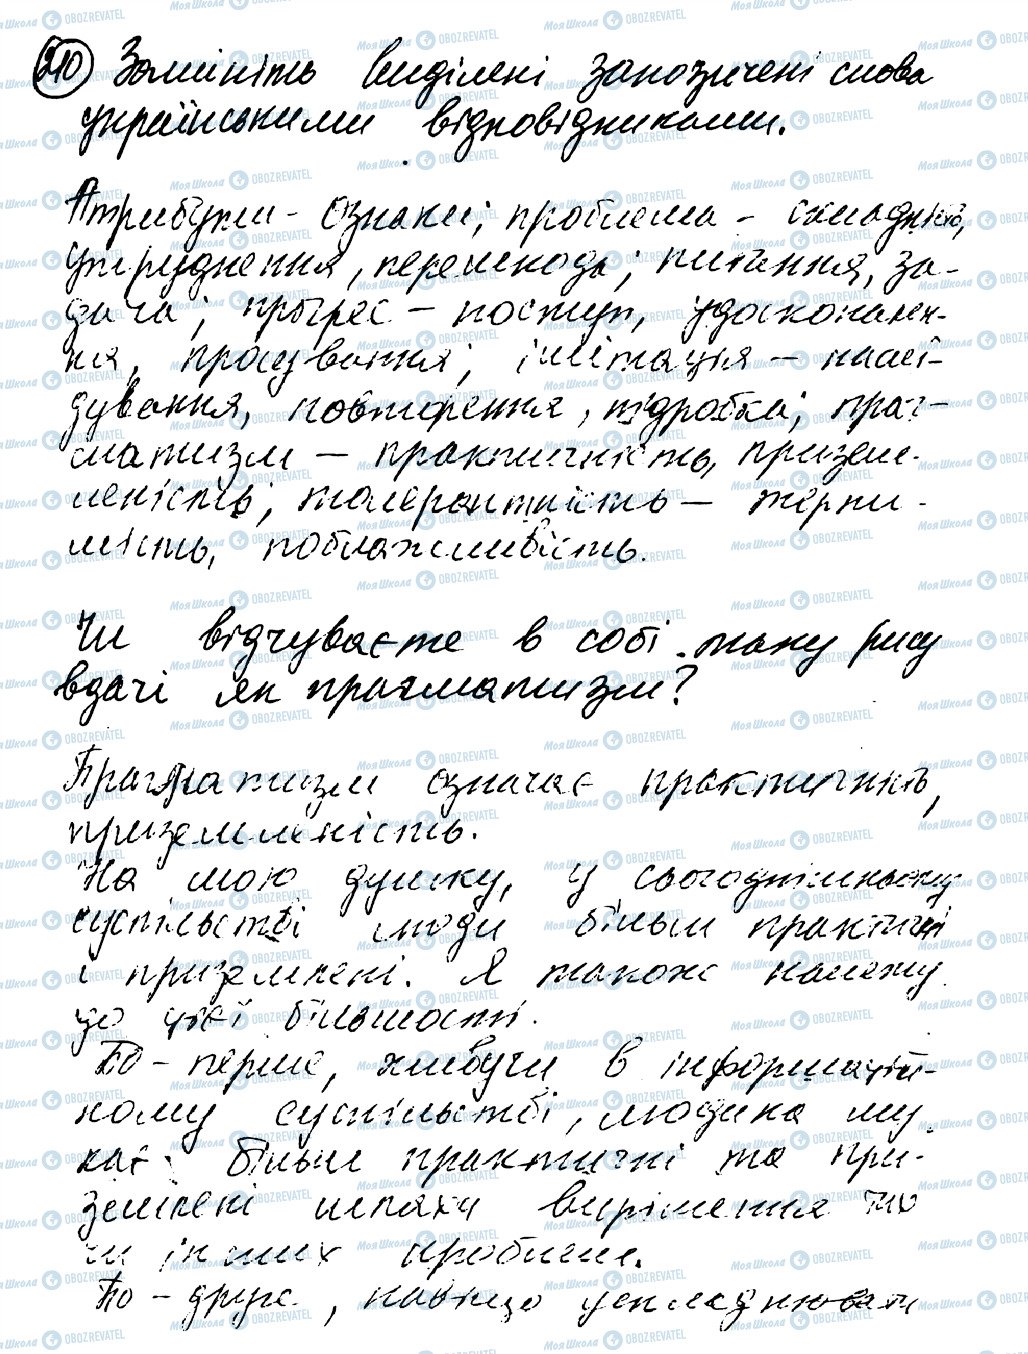 ГДЗ Укр мова 8 класс страница 210